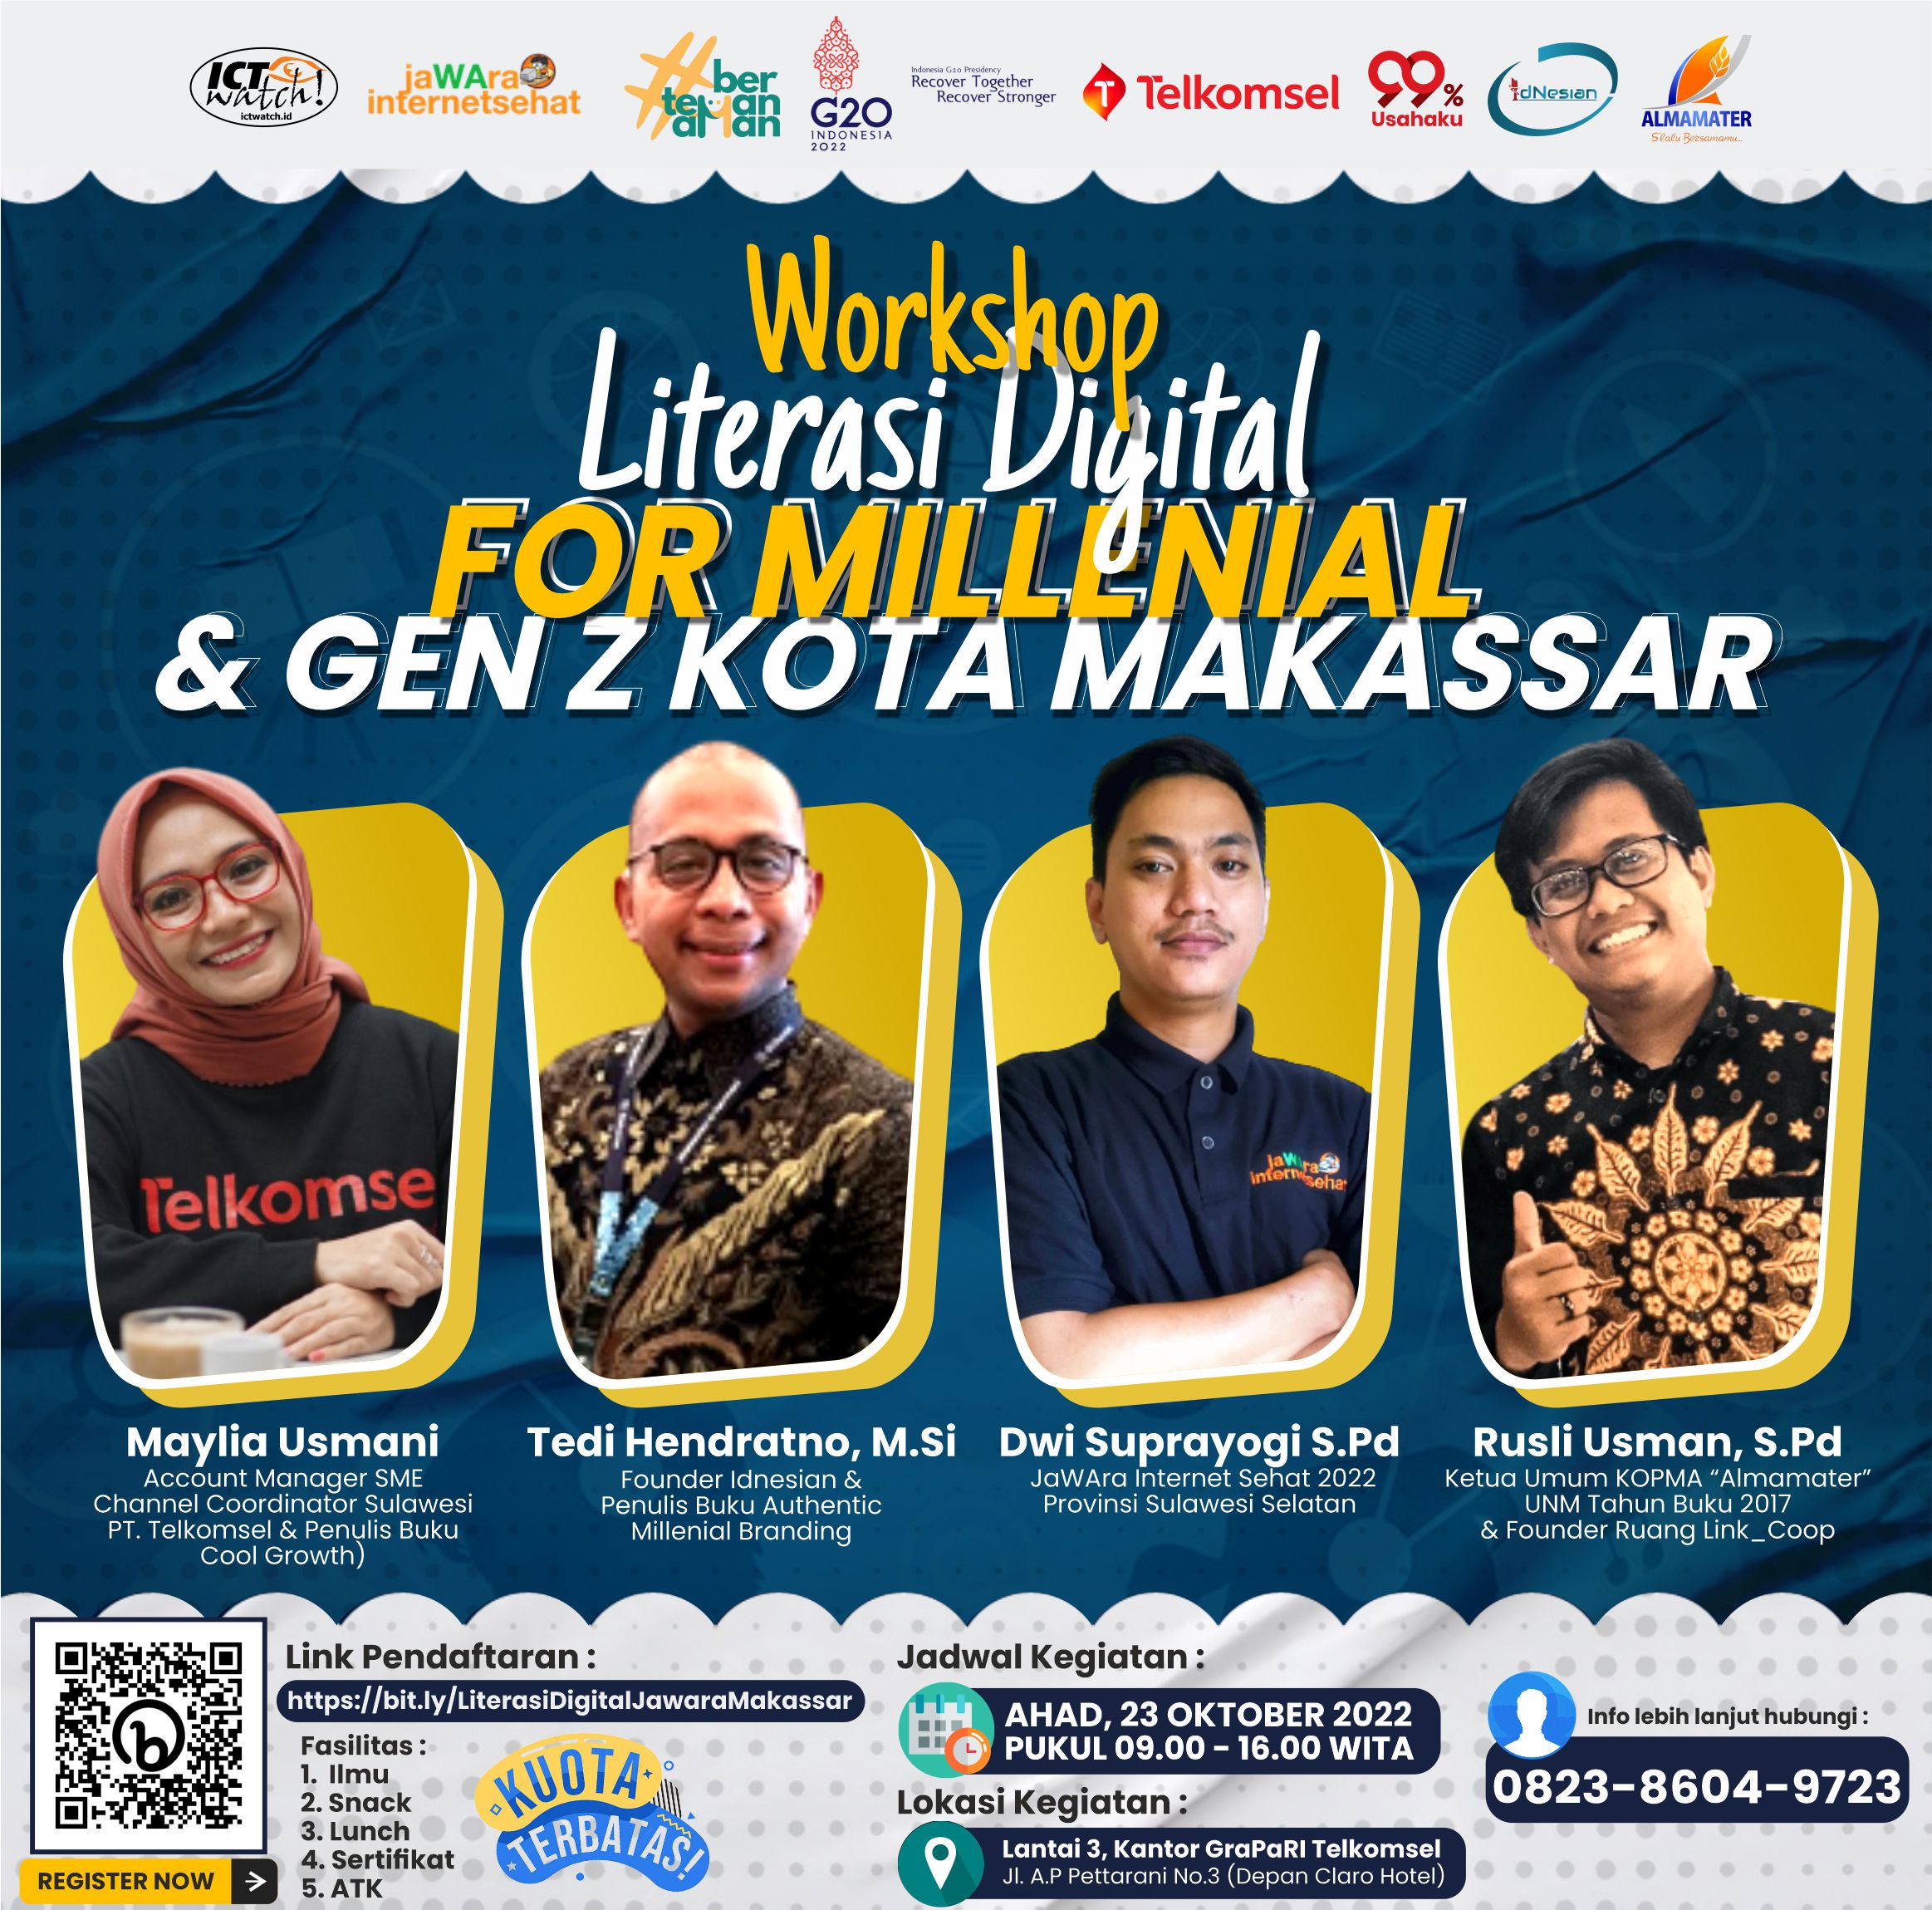 Workshop Literasi Digital For Millenial and Gen Z Kota Makassar